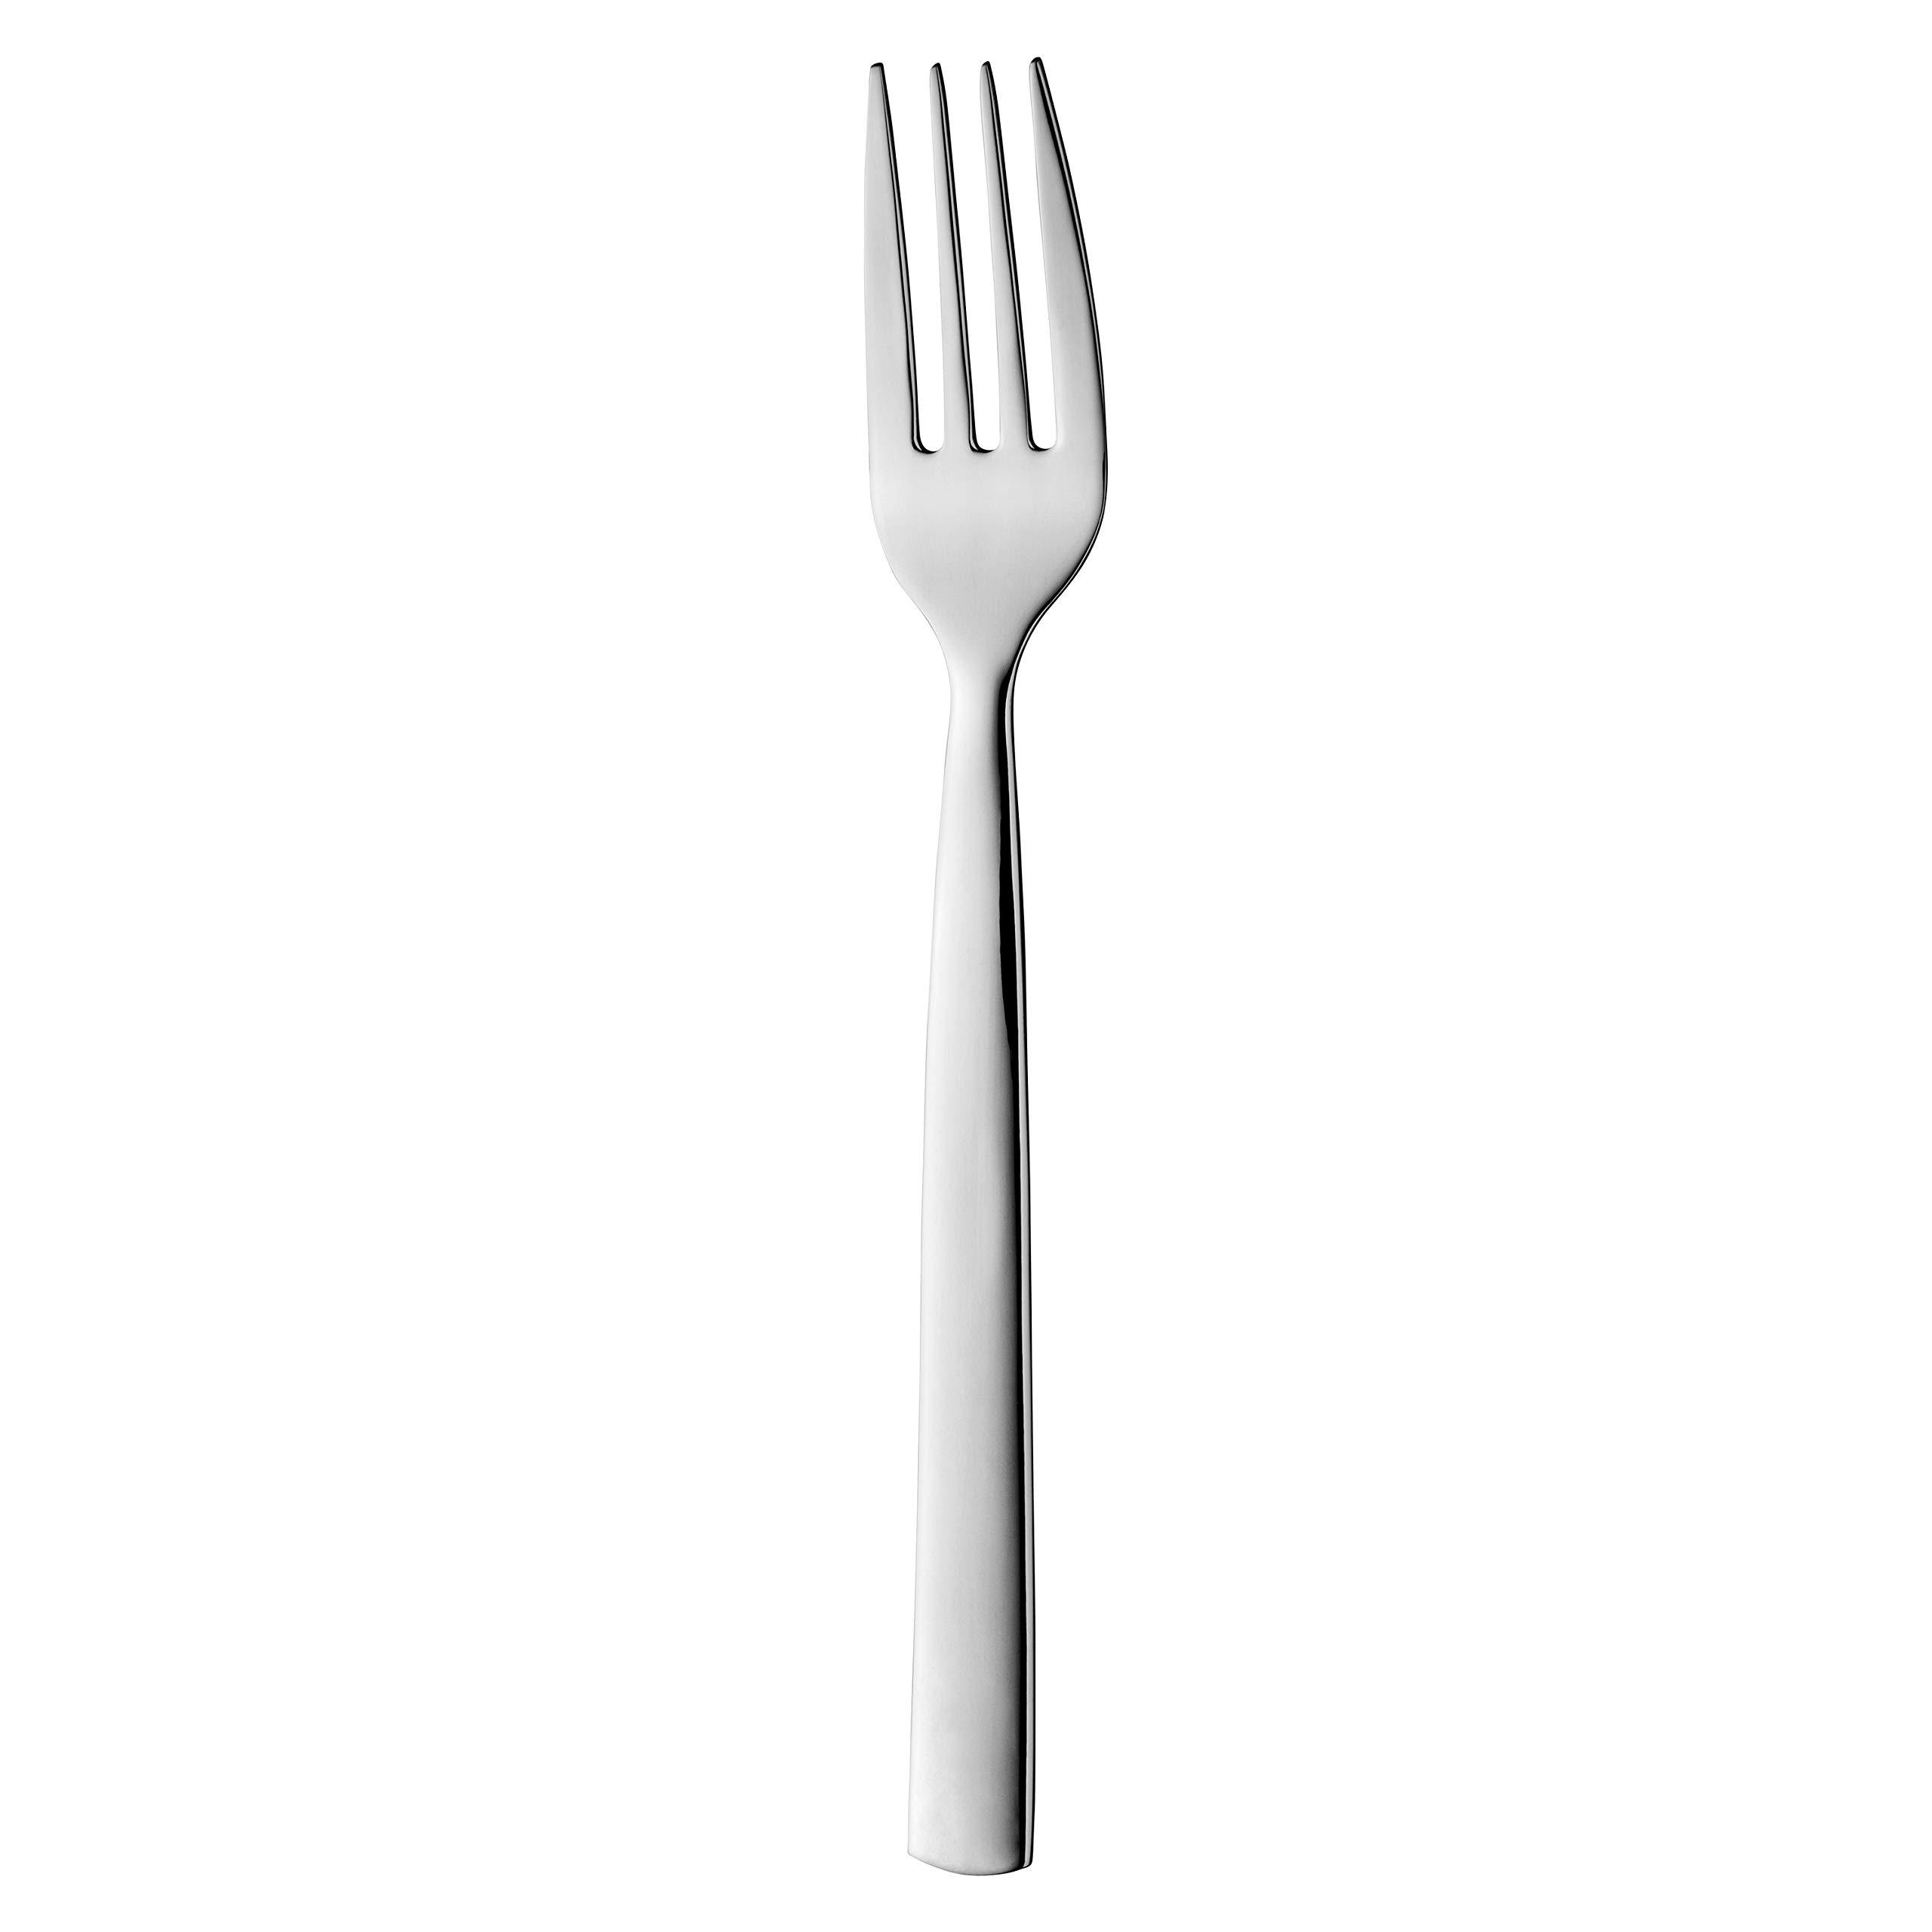 berghoff essentials stainless steel set of 12pc evita forks 7.75" silver ergonomically designed handle everyday use elegant d